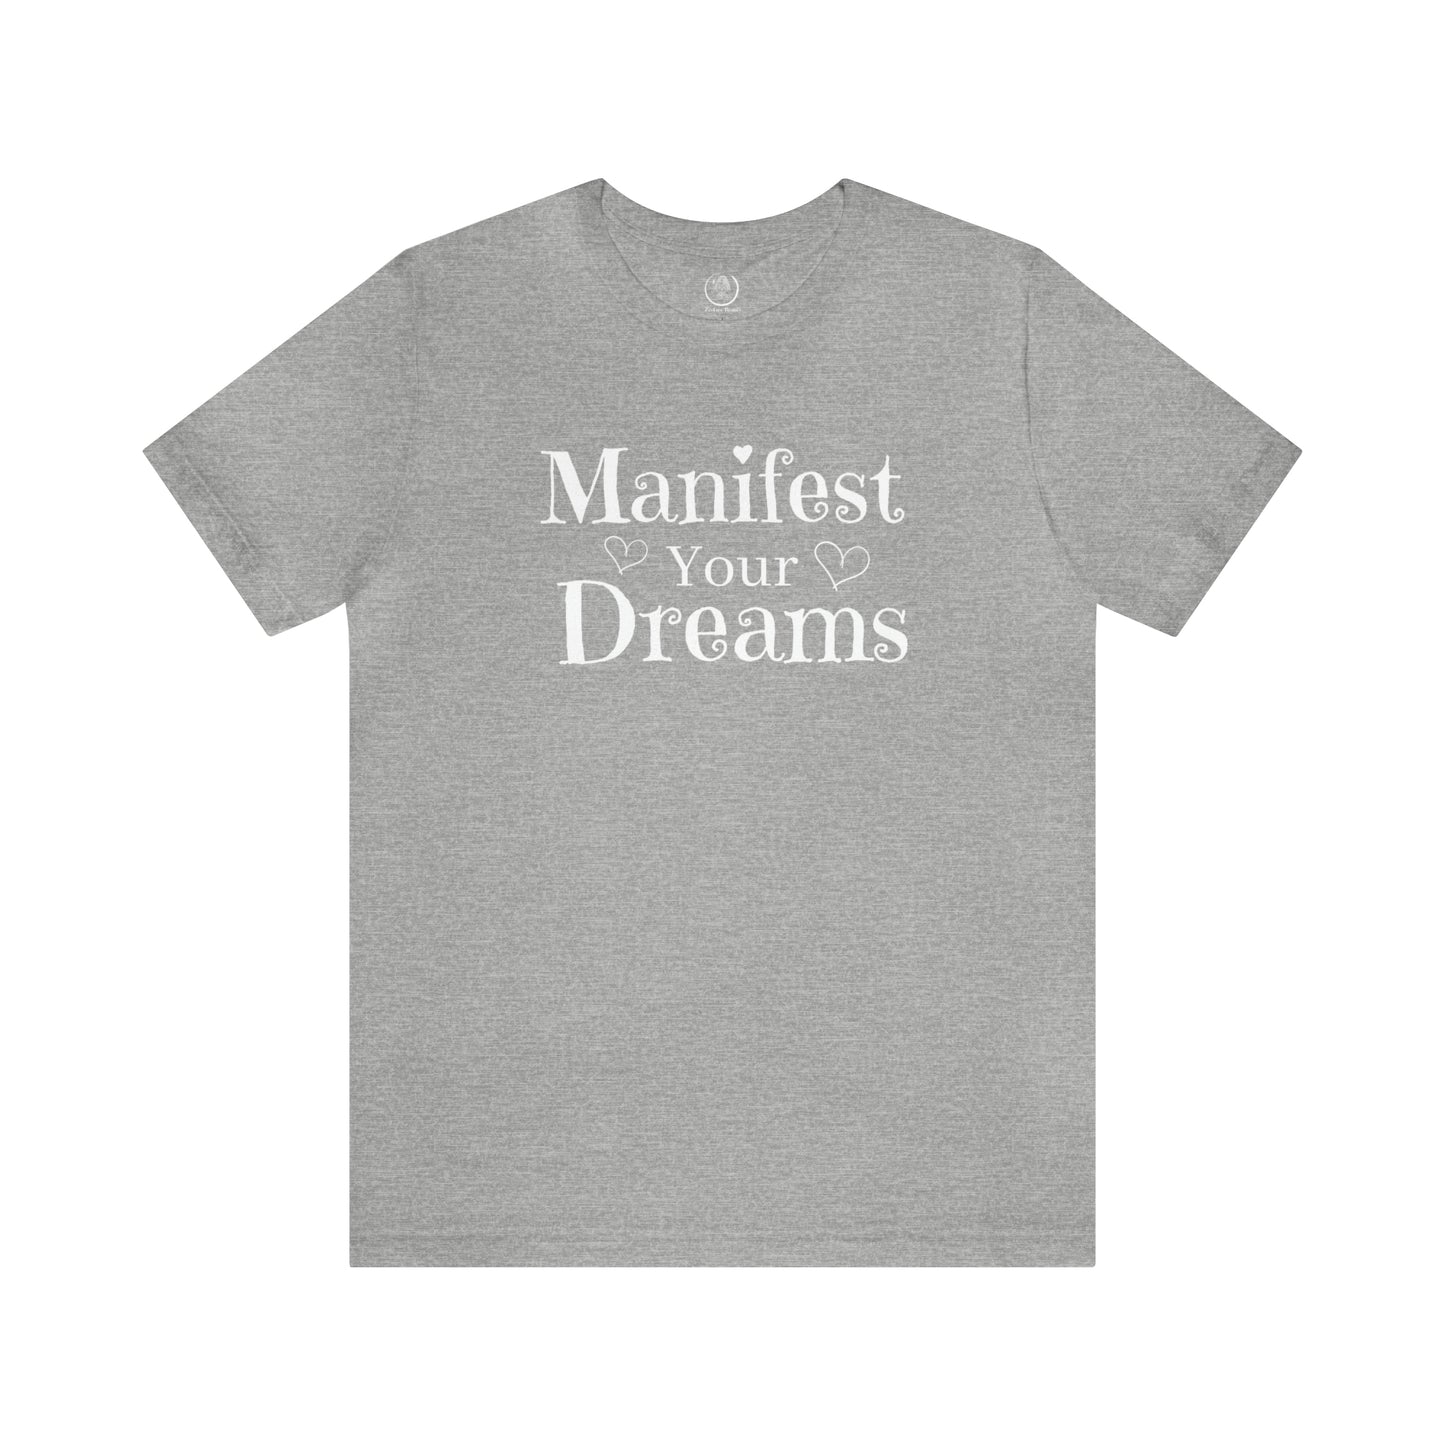 Manifest your dreams inspirational T-shirt,  motivational shirt, minimalist shirt, graphic tee for women, empowerment tshirt, positive tee